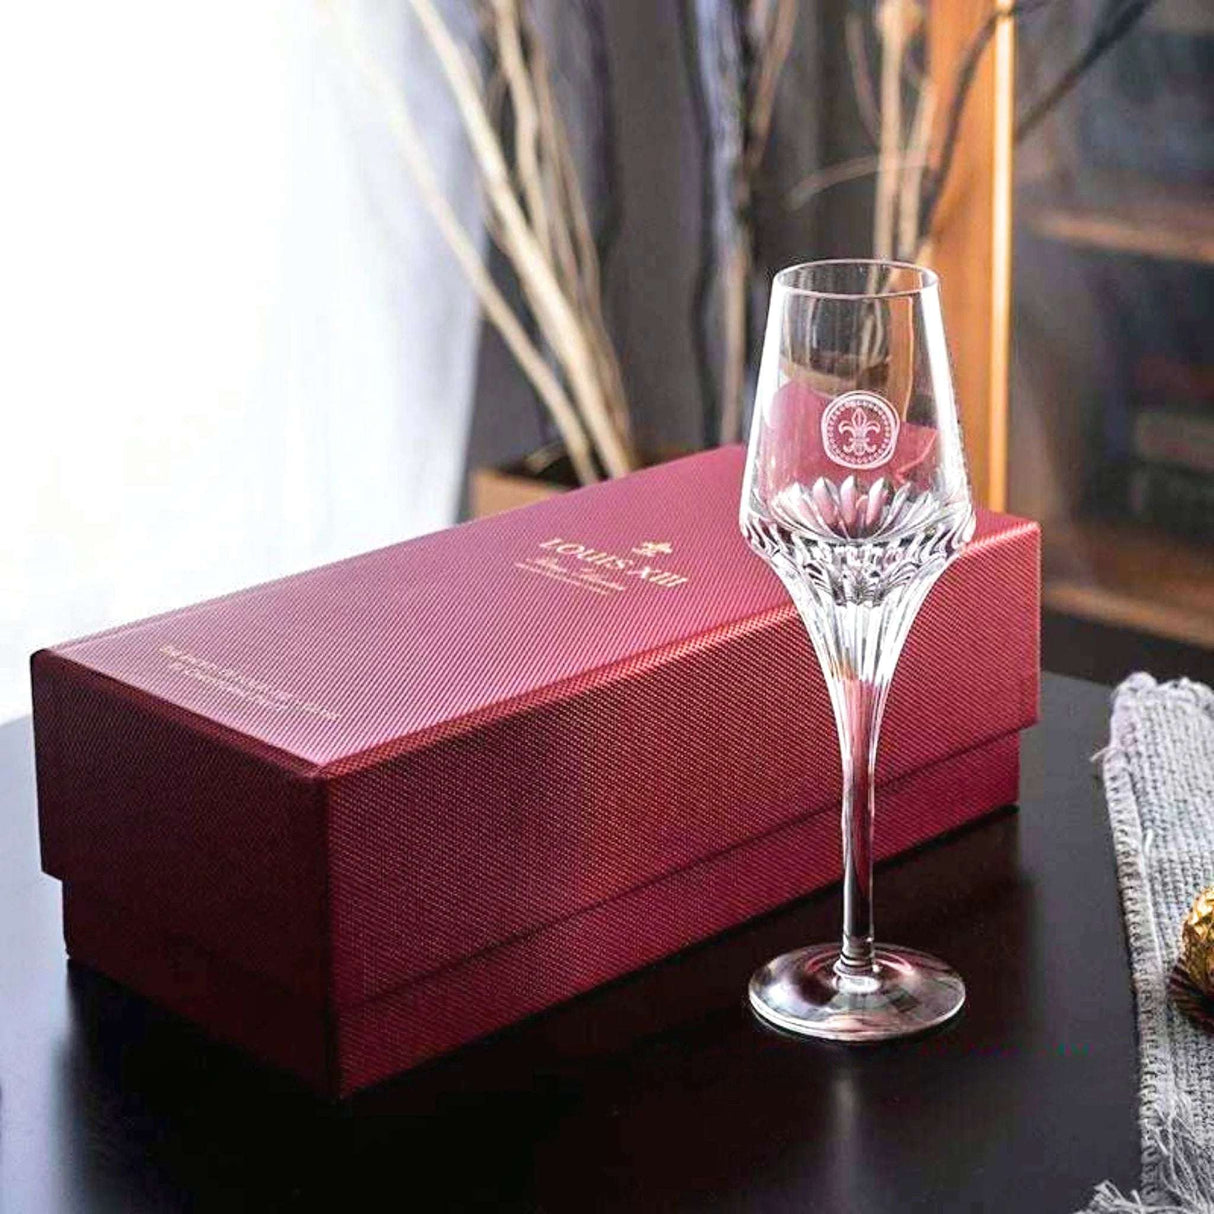 Louis XIII Luxury Crystal Cognac Glasses - Julia M LifeStyles